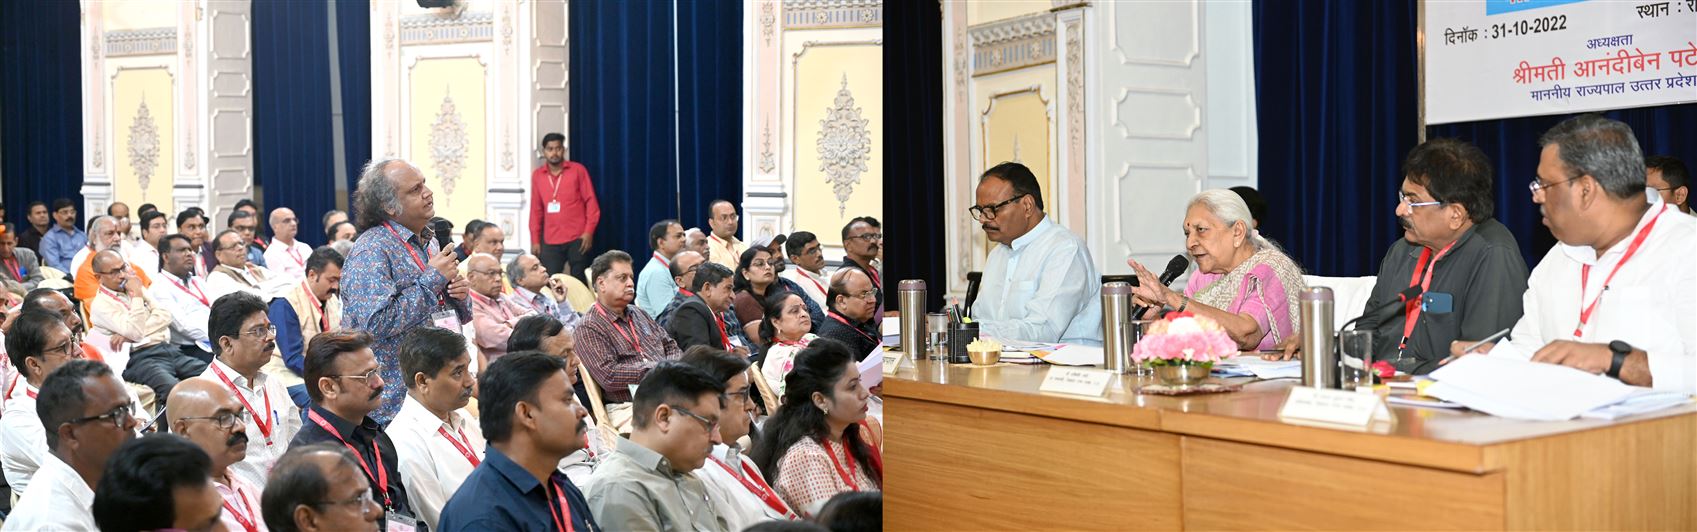 Annual General Meeting of State Branch of Indian Red Cross Society, Uttar Pradesh held under the Chairpersonship of the Governor/राज्यपाल की अध्यक्षता में सम्पन्न हुई इण्डियन रेडक्रास सोसाइटी उत्तर प्रदेश राज्य शाखा की वार्षिक सामान्य बैठक/राज्यपाल ने लखनऊ स्थित मौसम केन्द्र, अमौसी के नवनिर्मित भवन का उद्घाटन किया